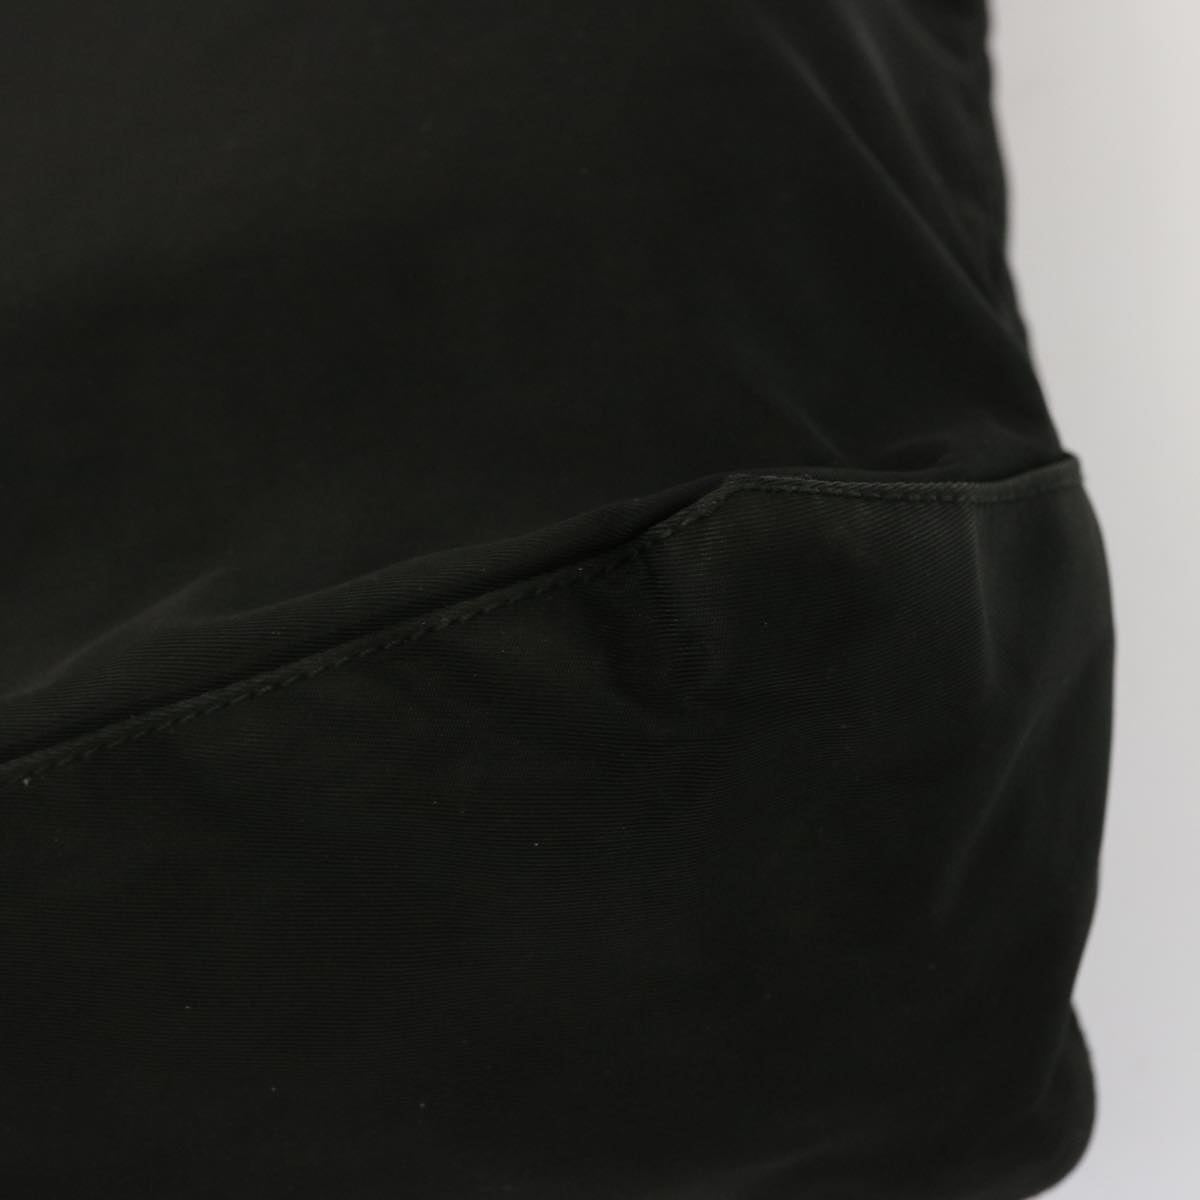 PRADA Tote Bag Nylon Black Auth 72683